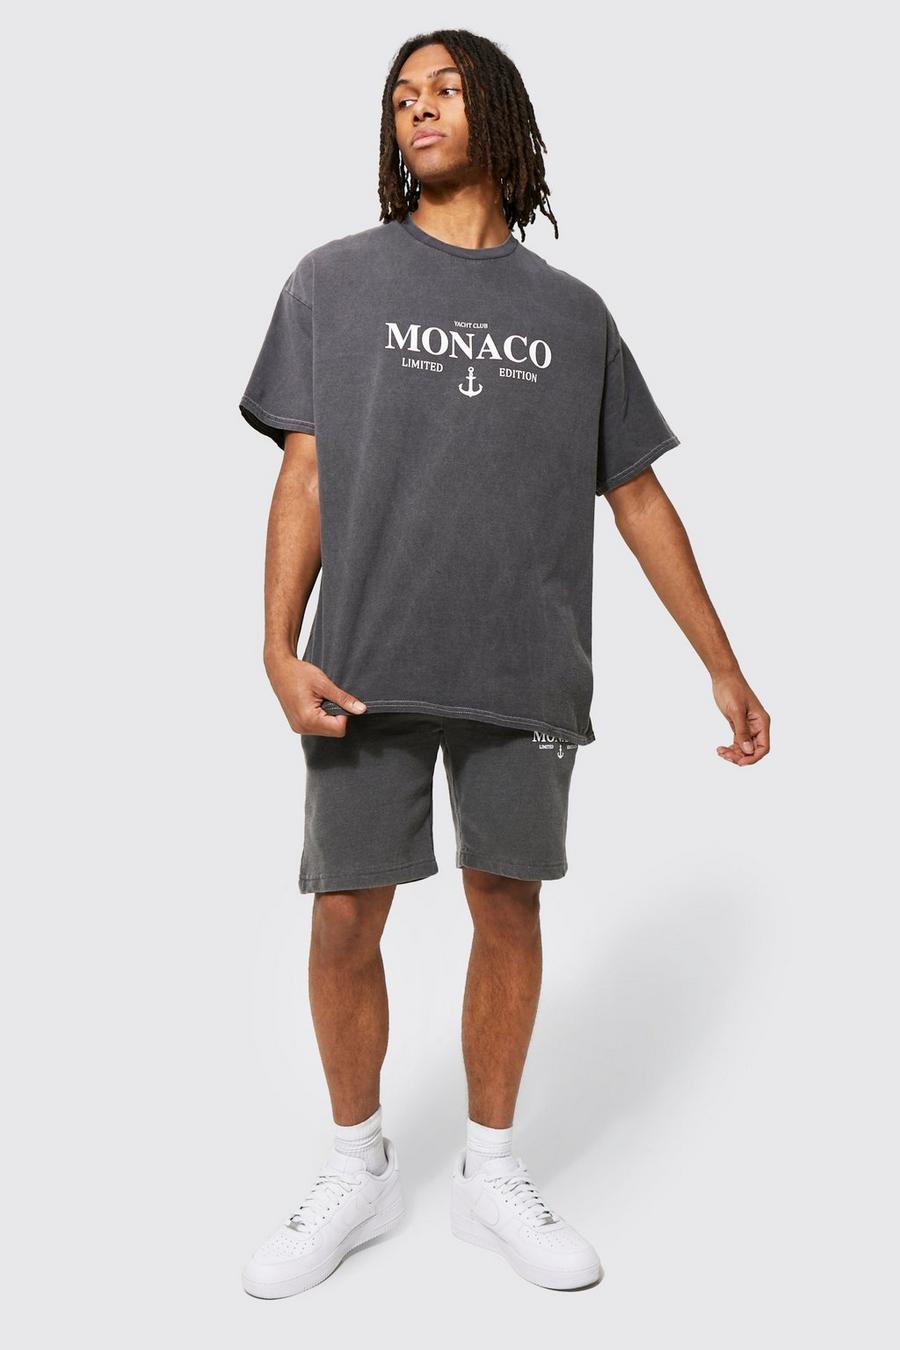 Charcoal gris Oversized Monaco T-shirt And Short Set